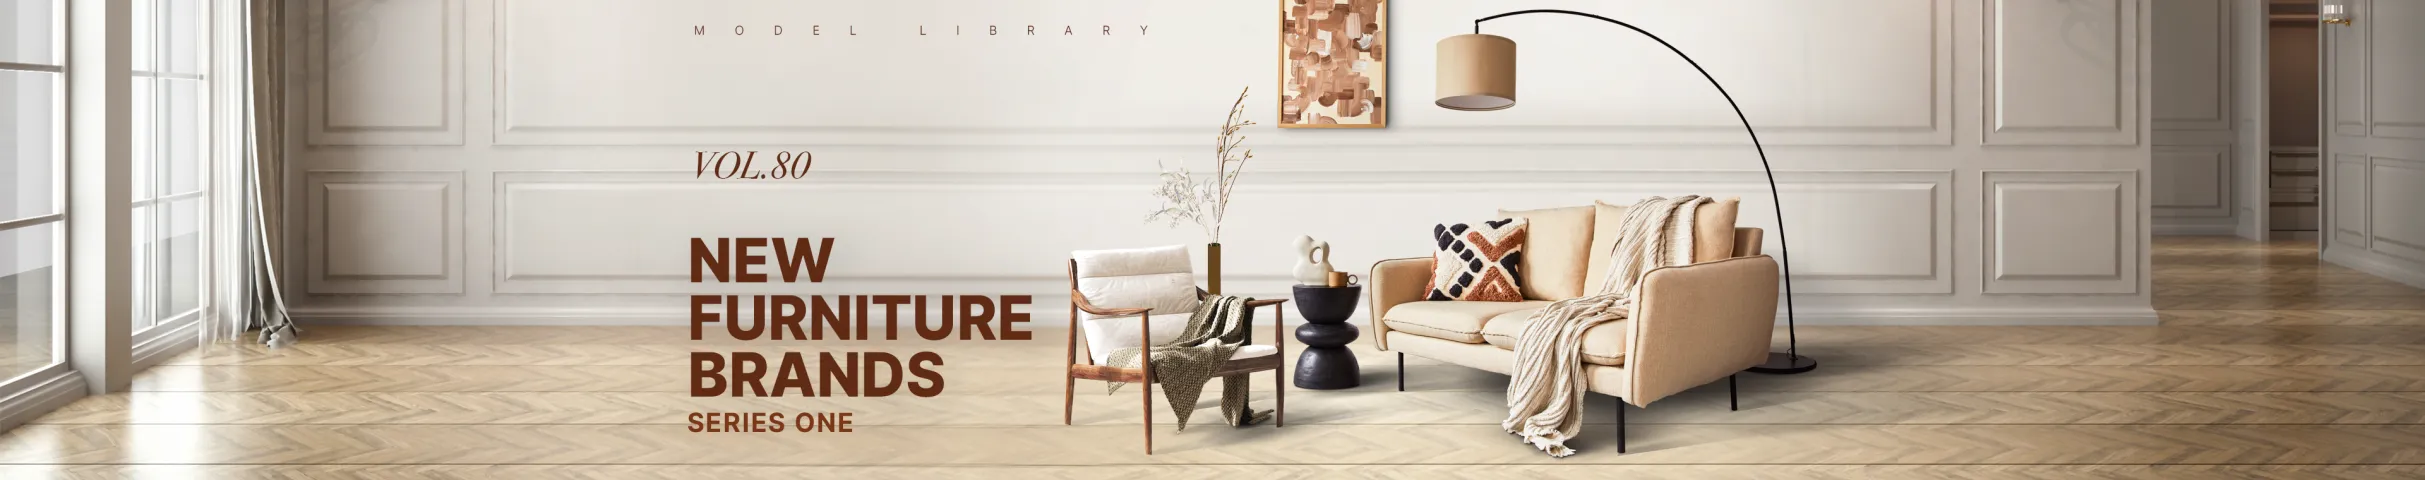 New Furniture Brands - 1